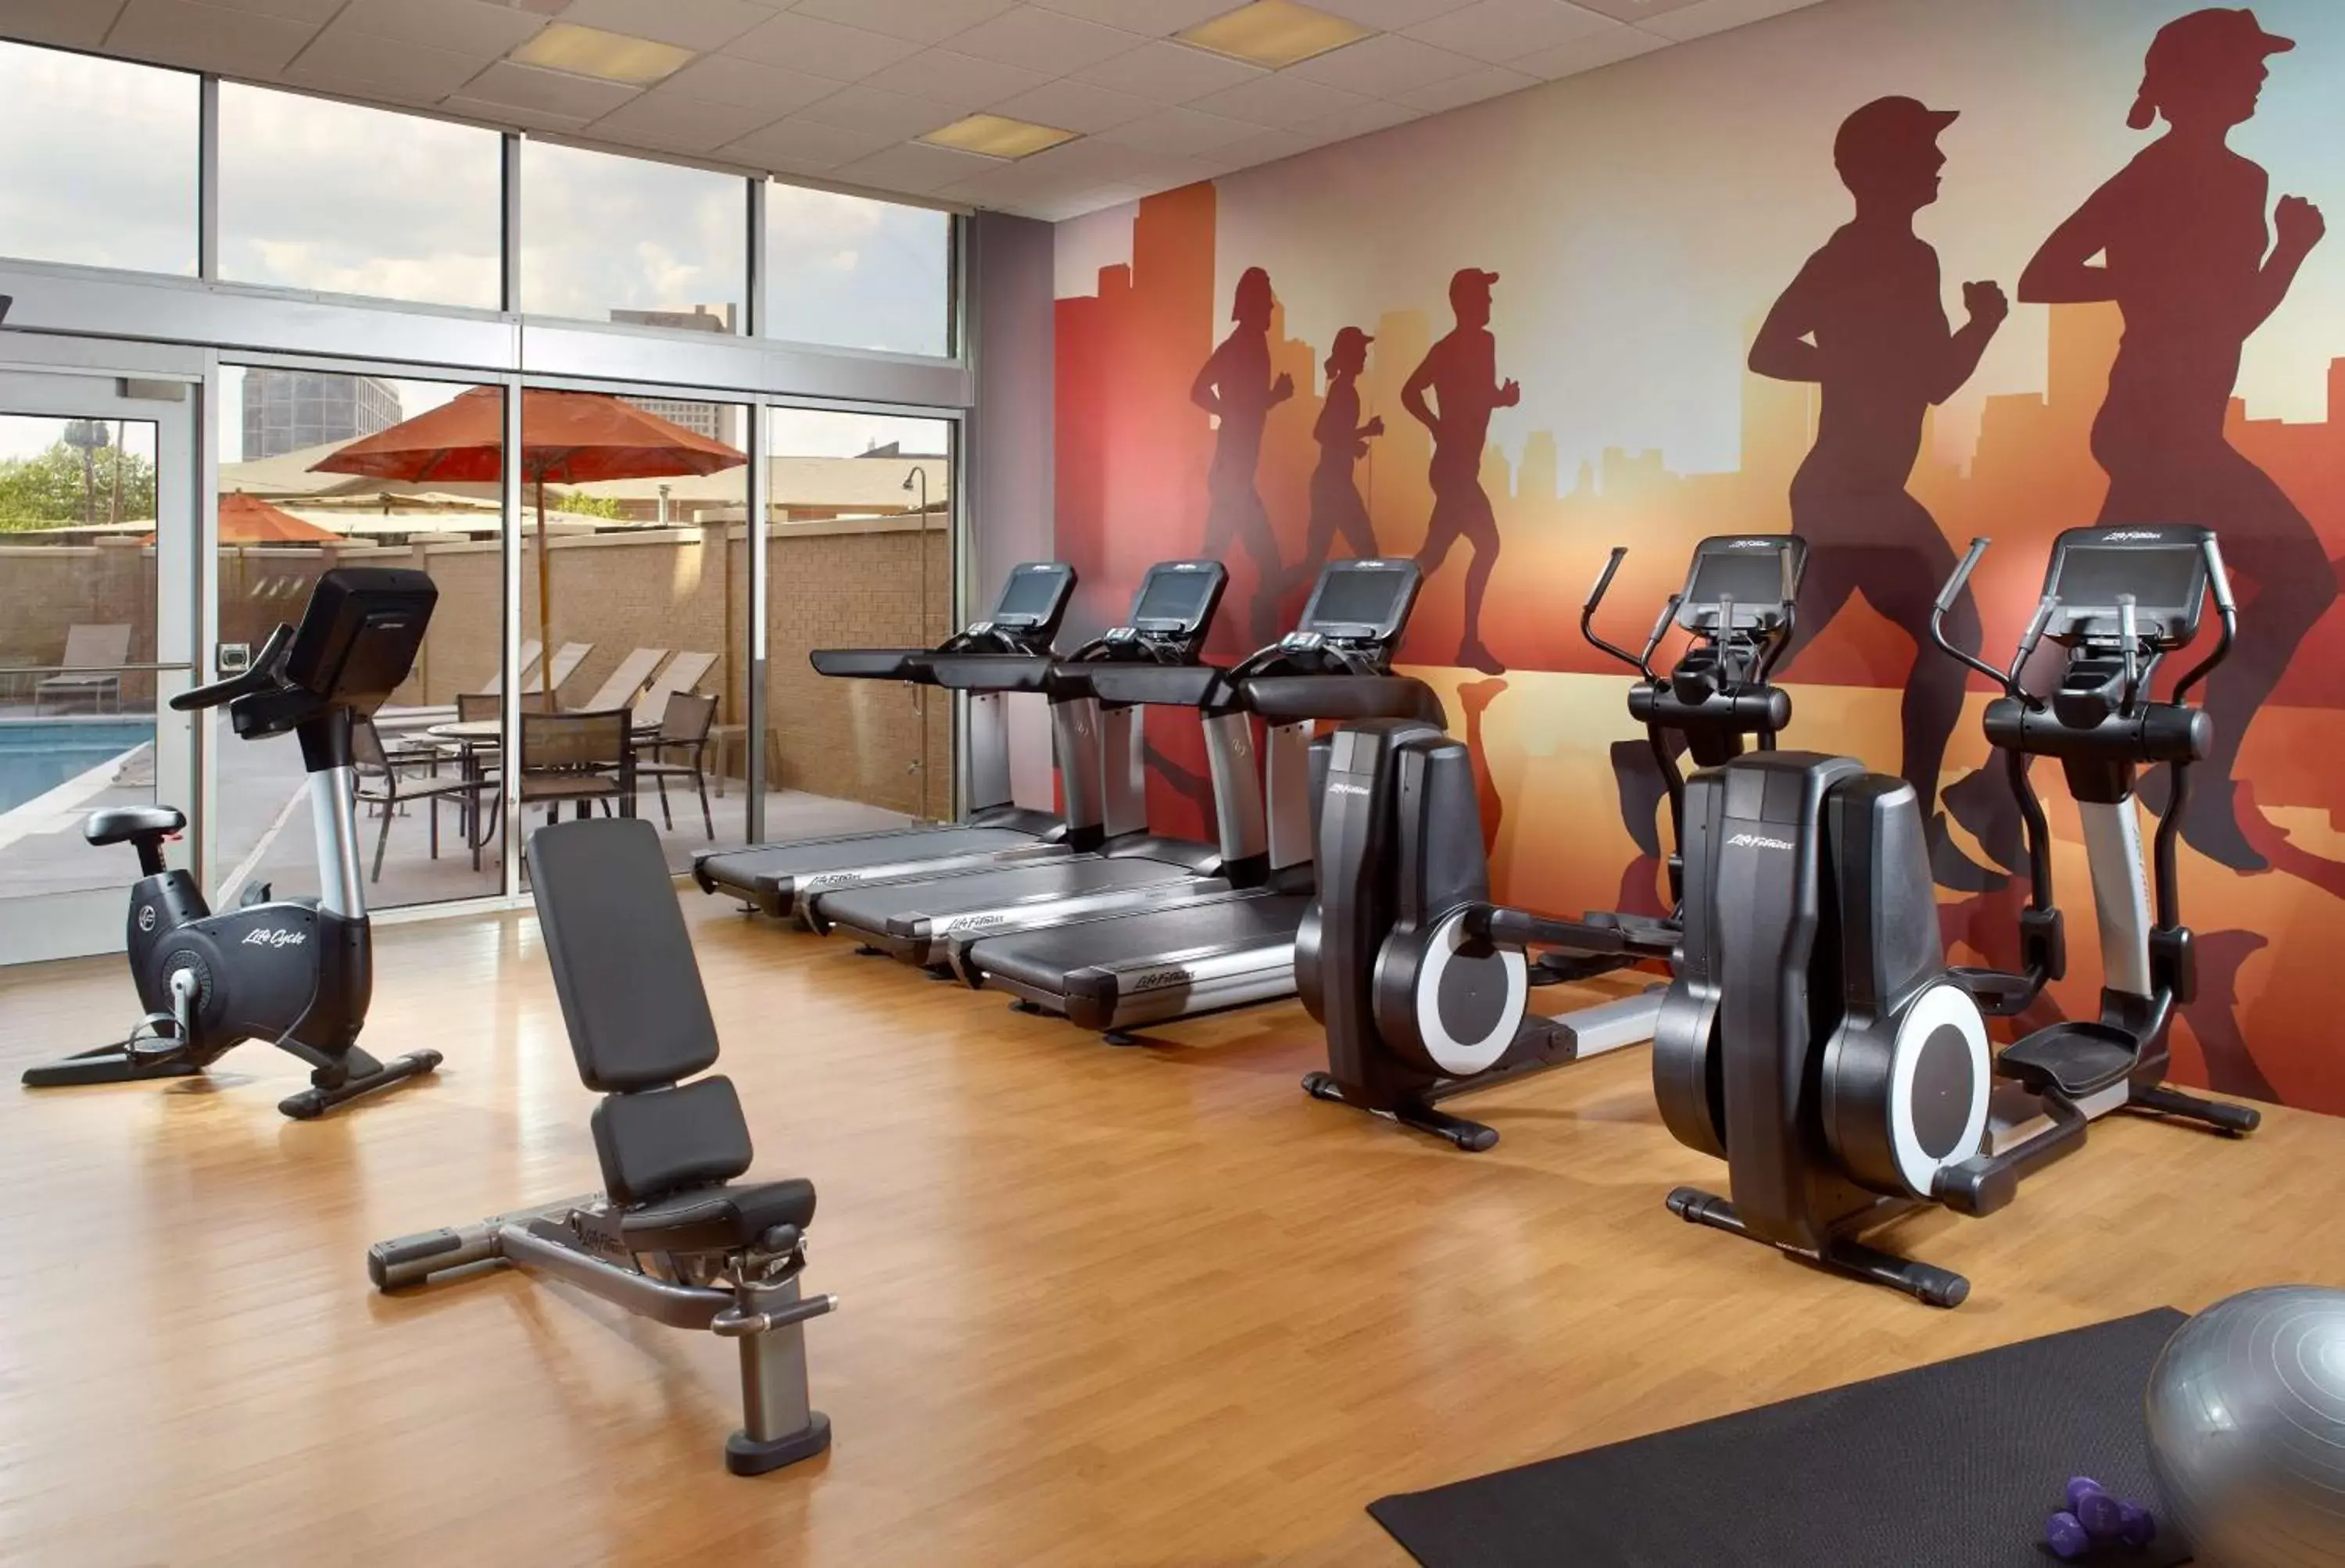 Fitness centre/facilities, Fitness Center/Facilities in Hyatt House Atlanta Downtown